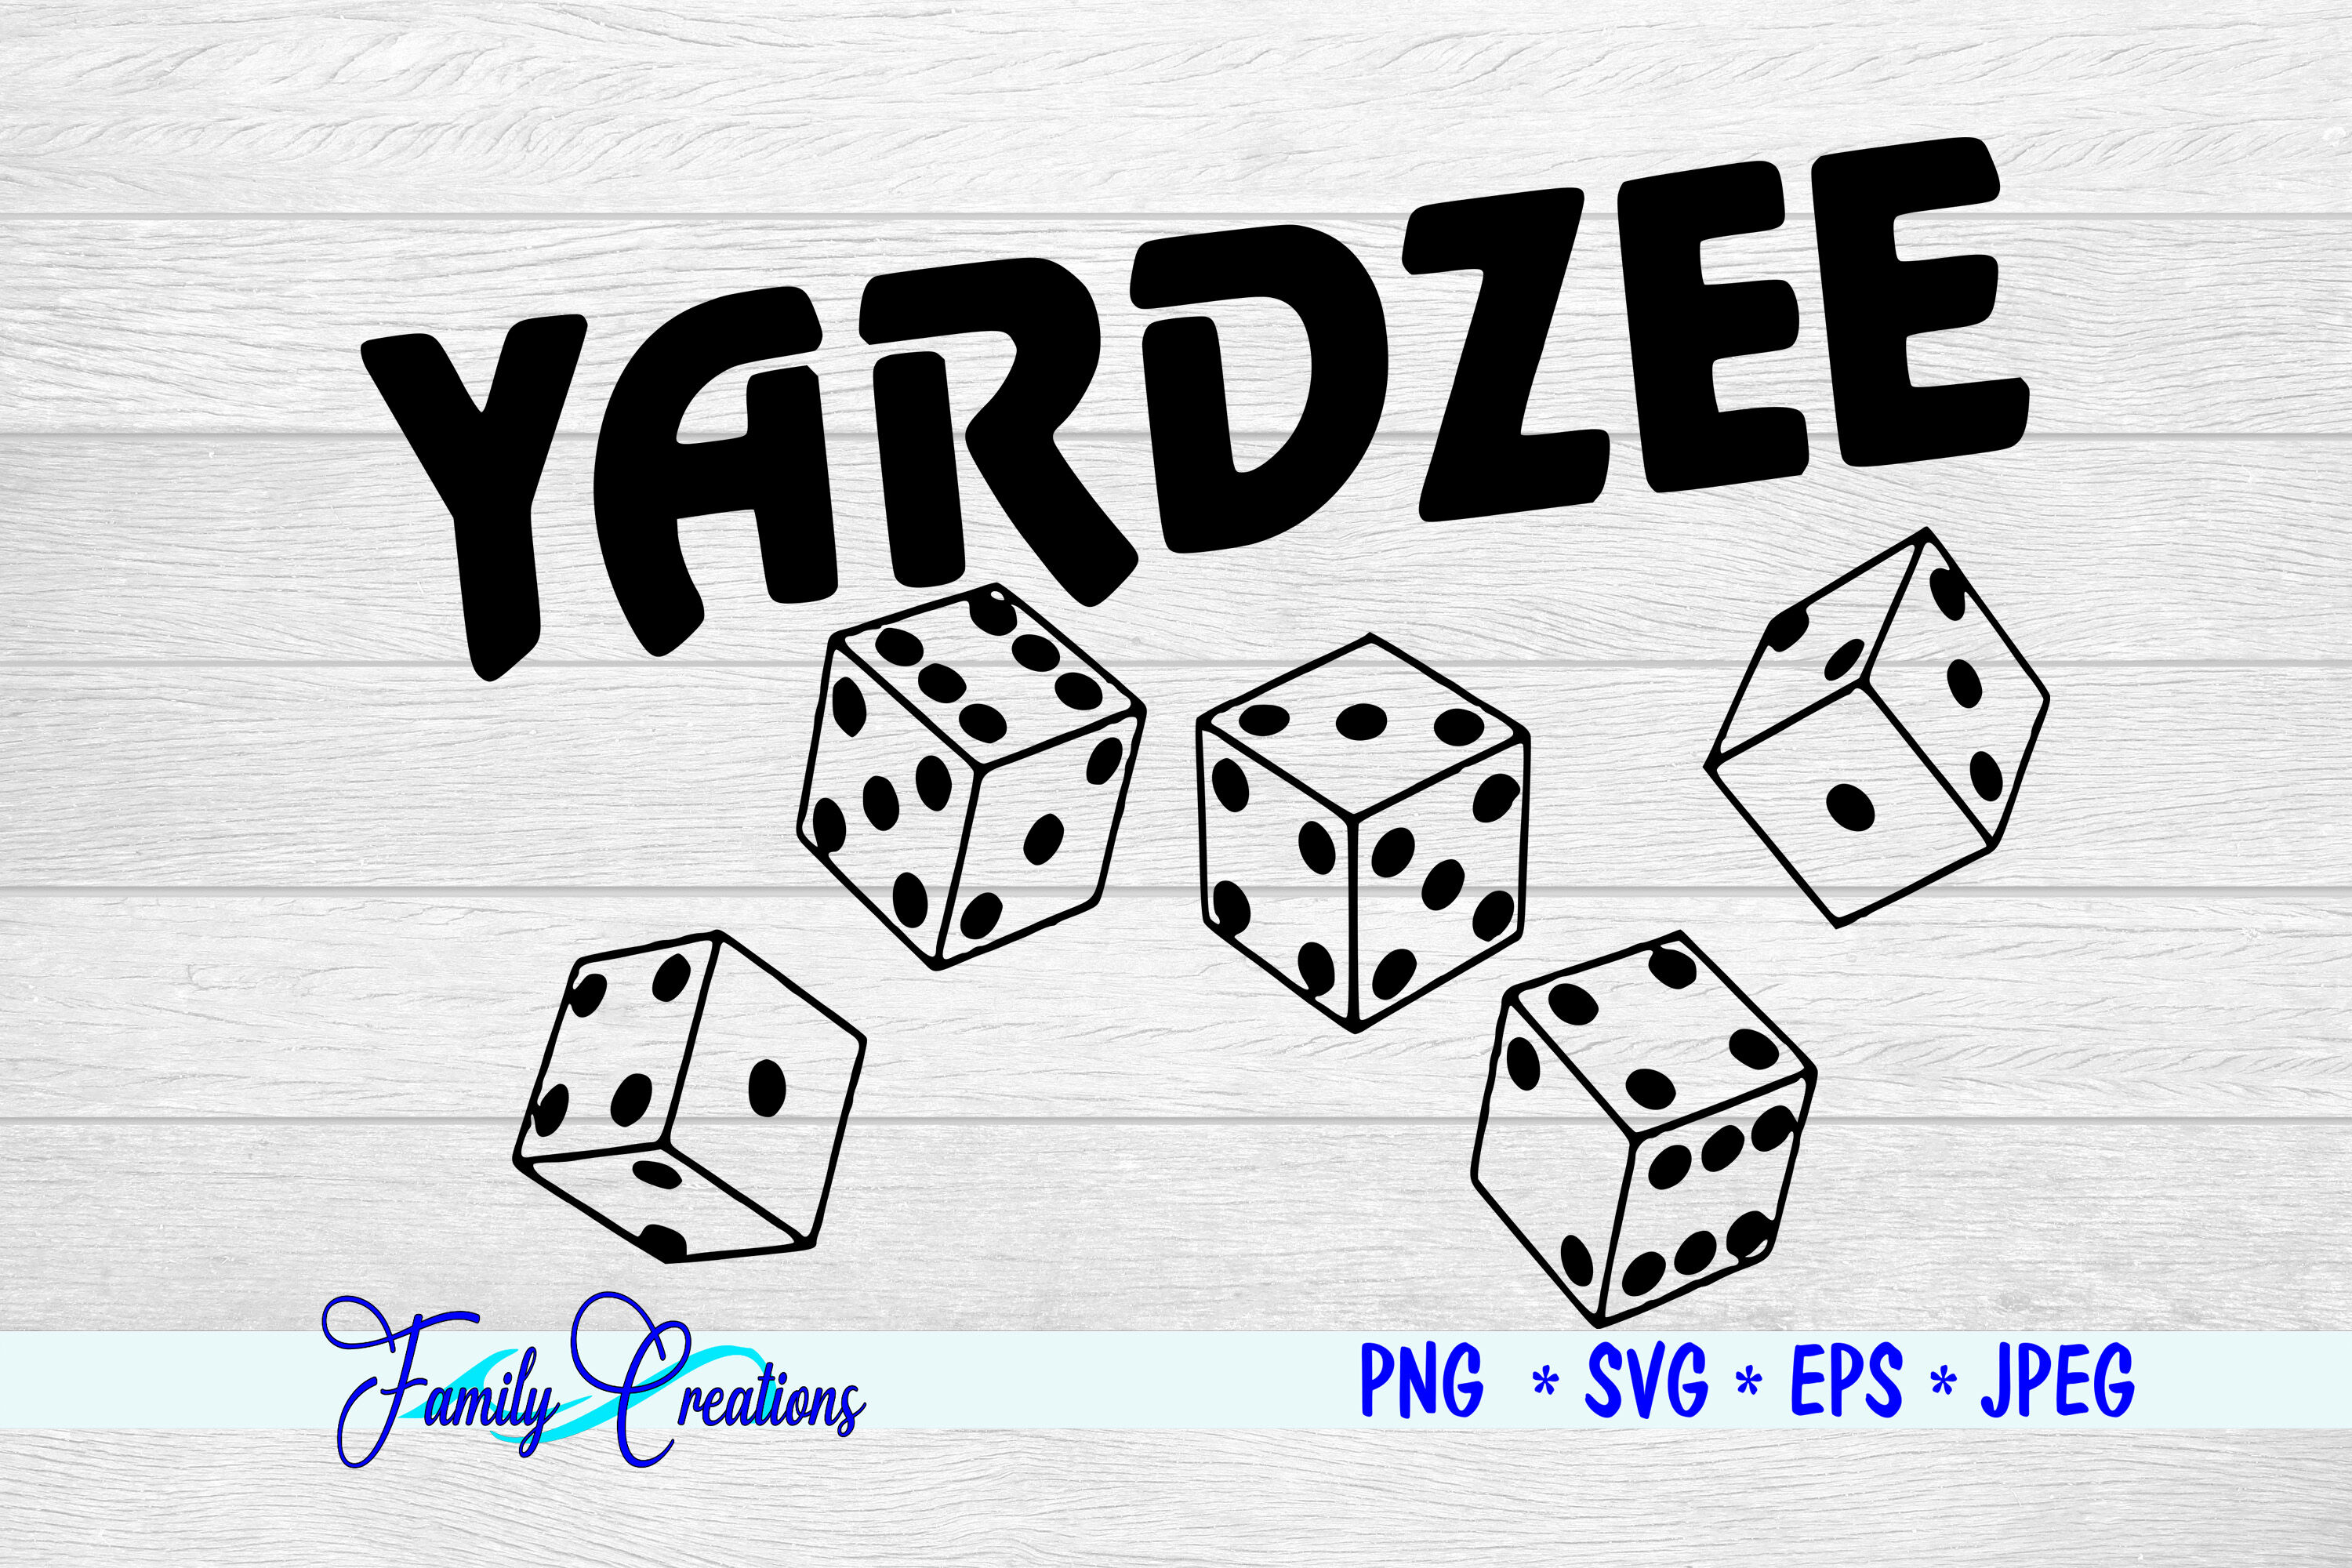 free-printable-yardzee-dice-template-bmp-pro